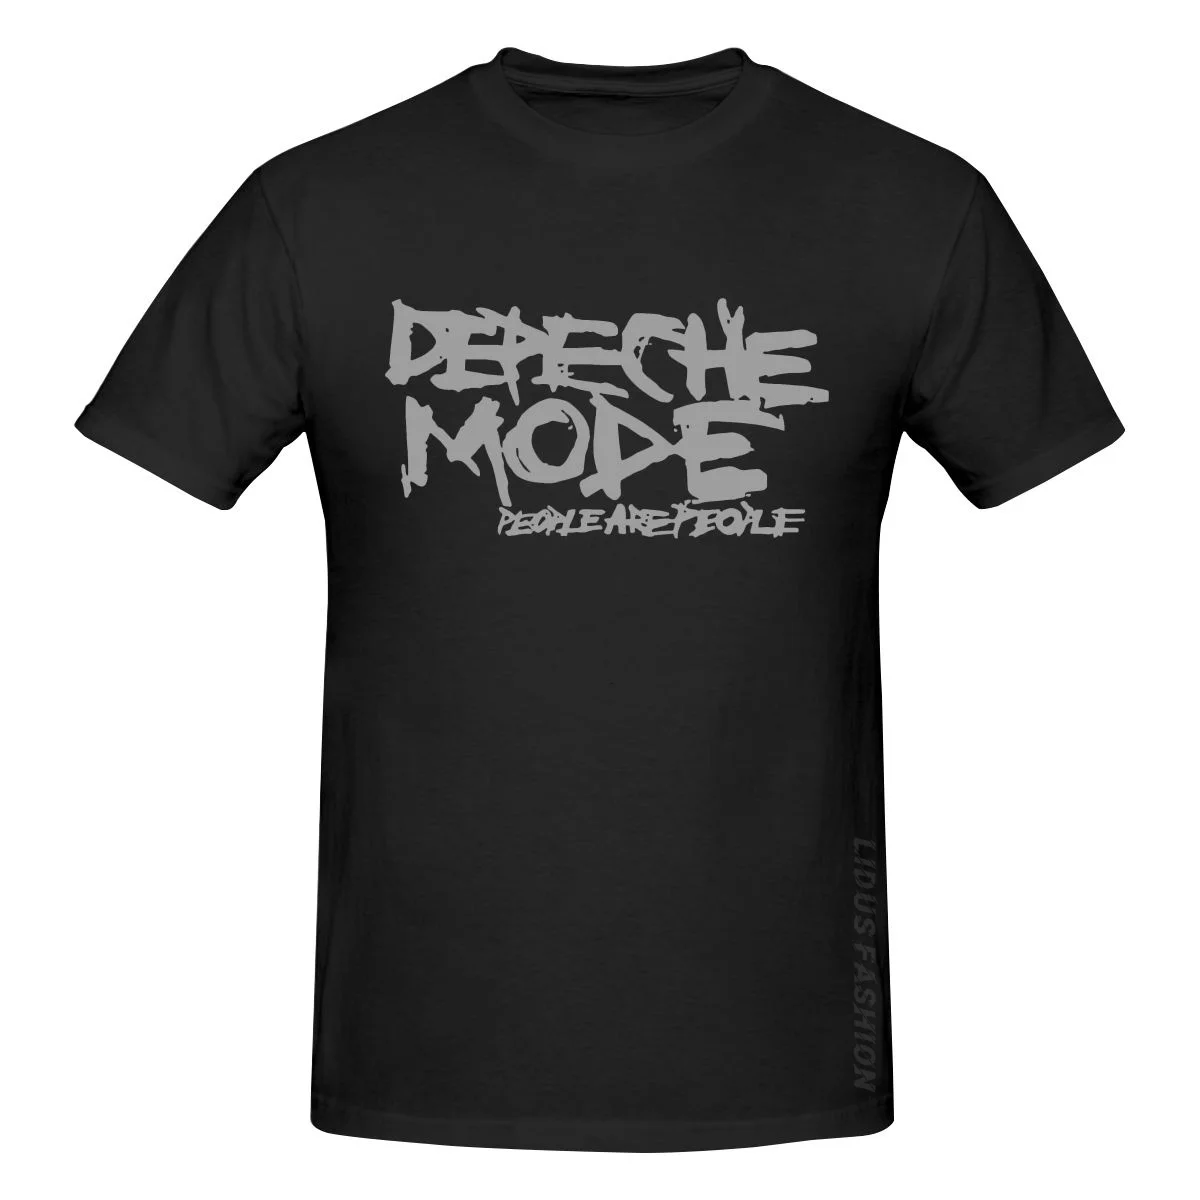 

Depeche-Mode People Are People English Electronic Music Band T Shirt Clothing Graphics Tshirt Short Sleeve Sweatshirt undershirt